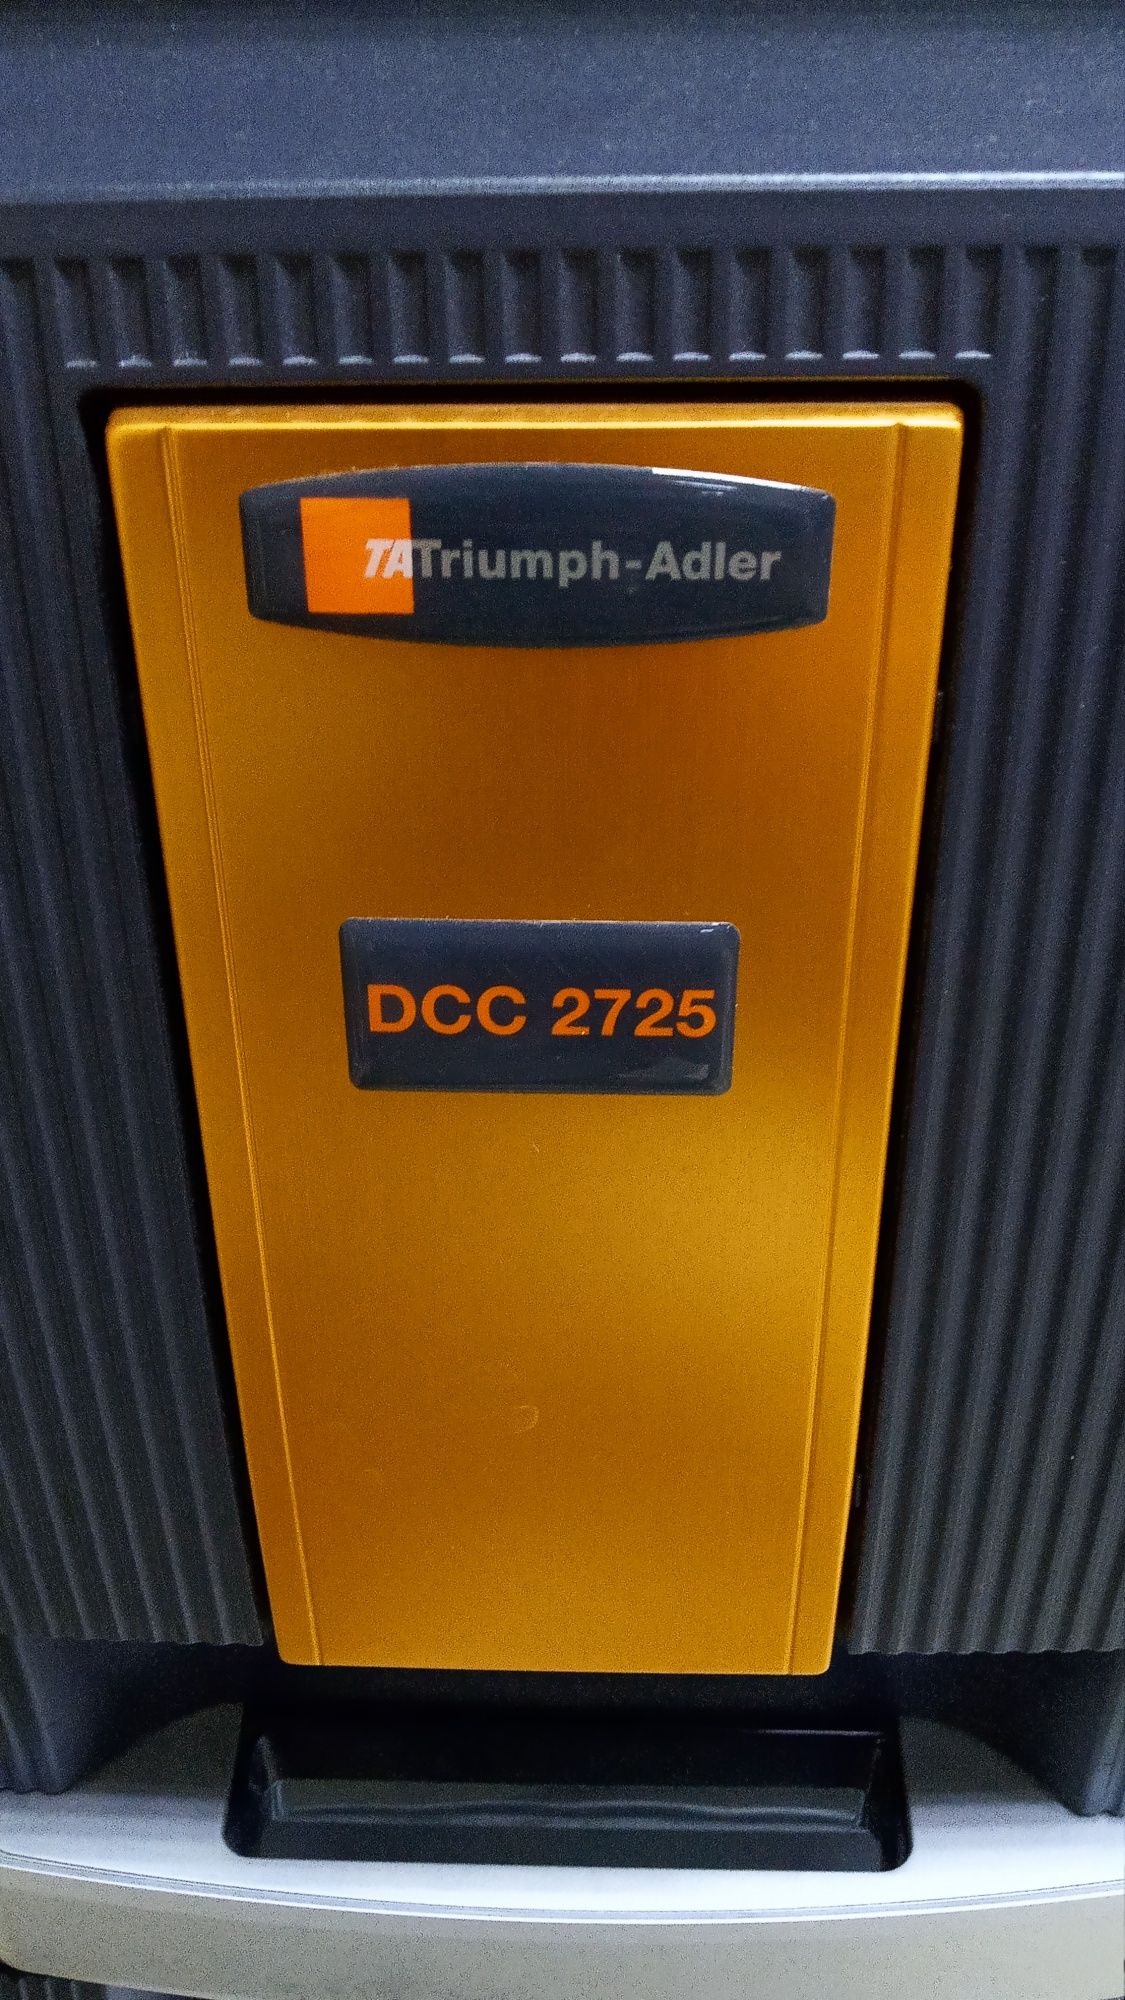 Triumph-Adler DCC2725 Kyocera Taskalfa 250c МФУ кольоровий принтер А3